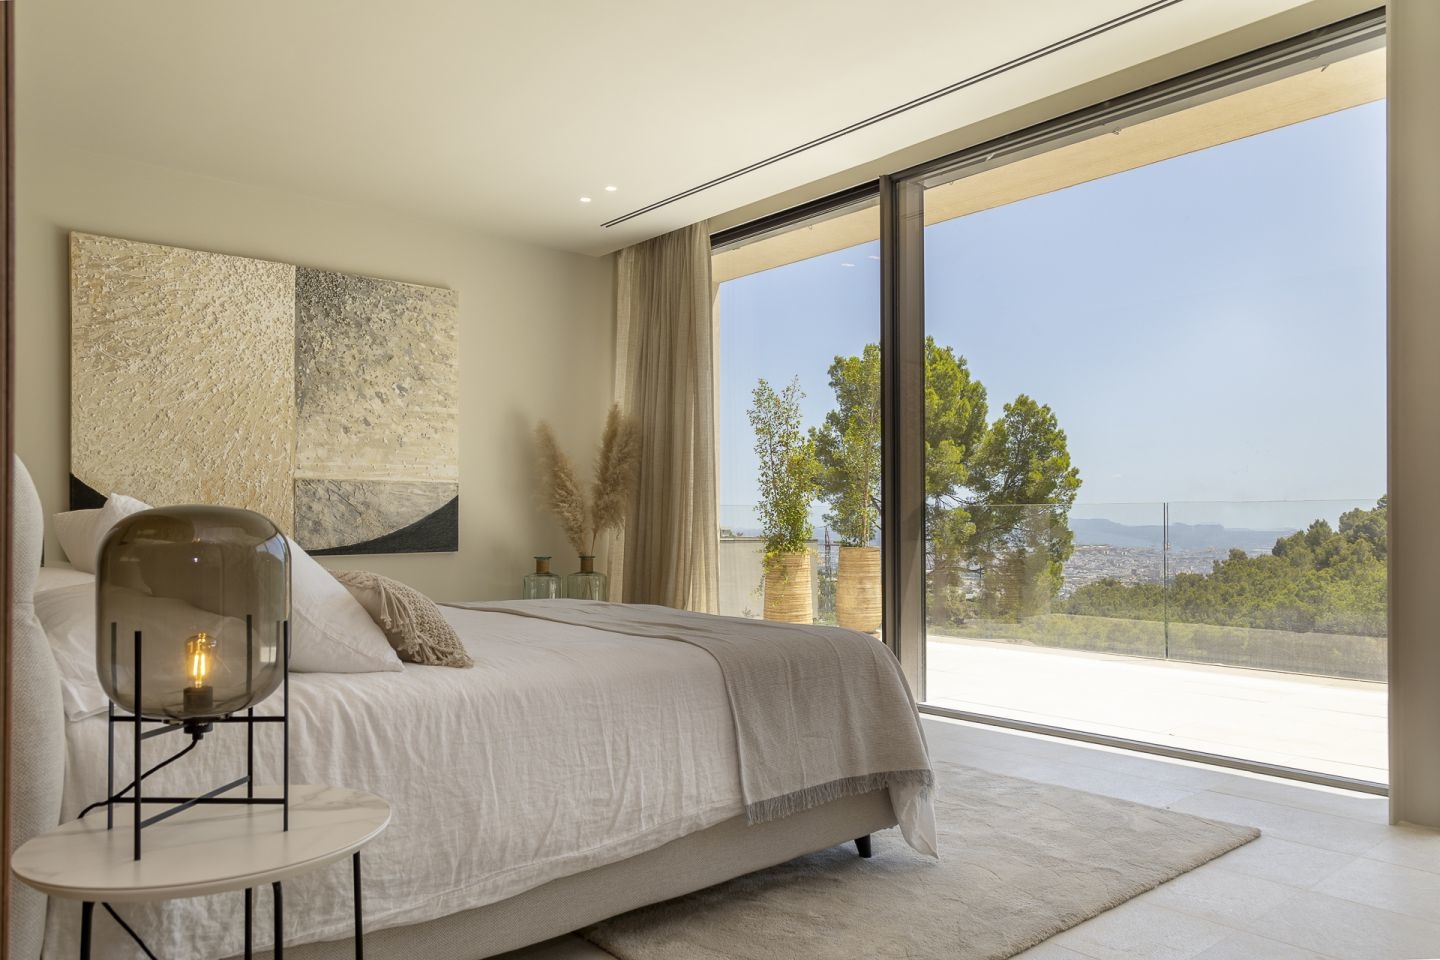 Superb luxury villa in Son Vida with panoramic views